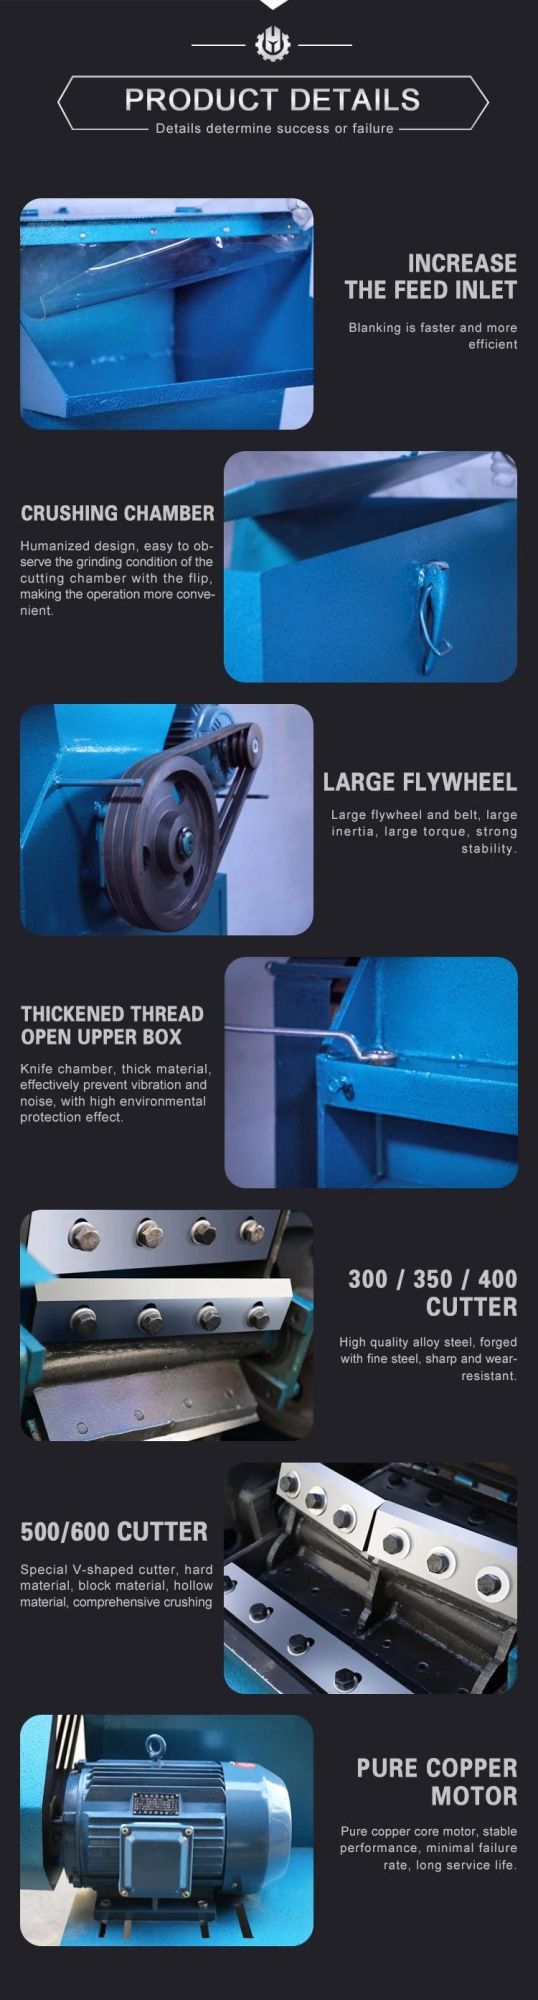 Film Pulverizer Machine/Film Granulators Crusher Machinery for Soft PE PP Pet PVC Materials Crushing and Recycling